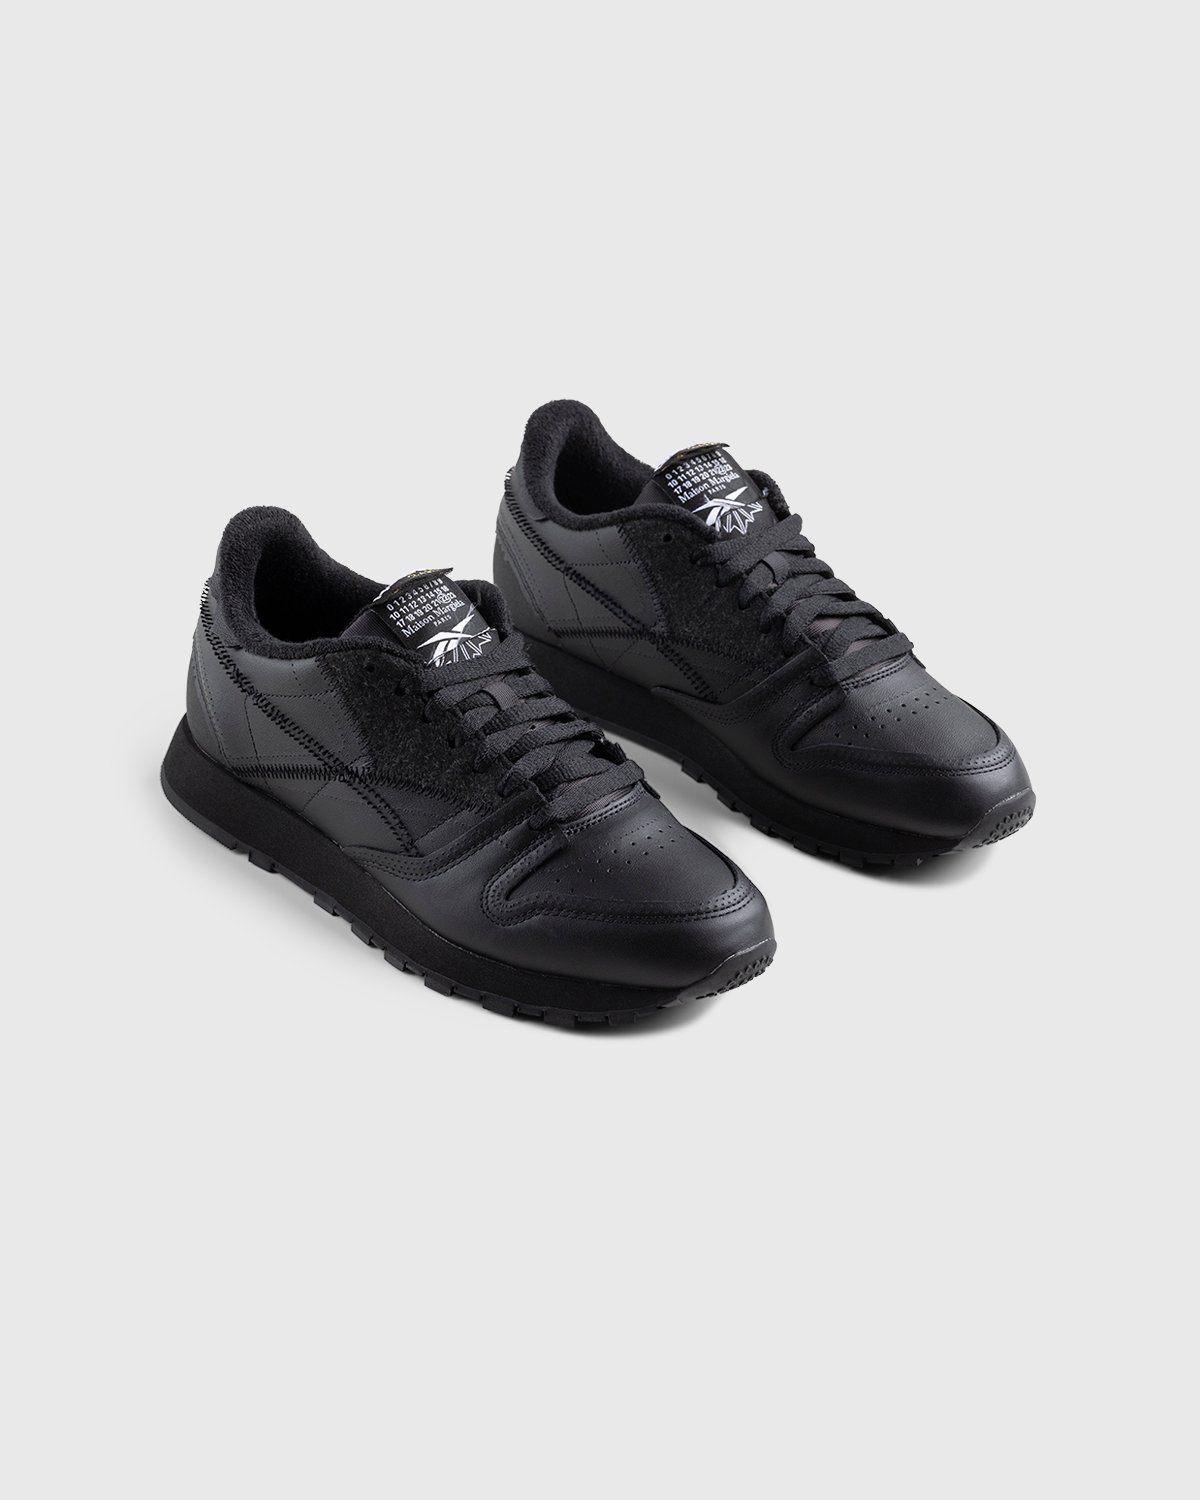 Maison Margiela x Reebok - Classic Leather Memory Of Black/Footwear White/Black - Footwear - Black - Image 4